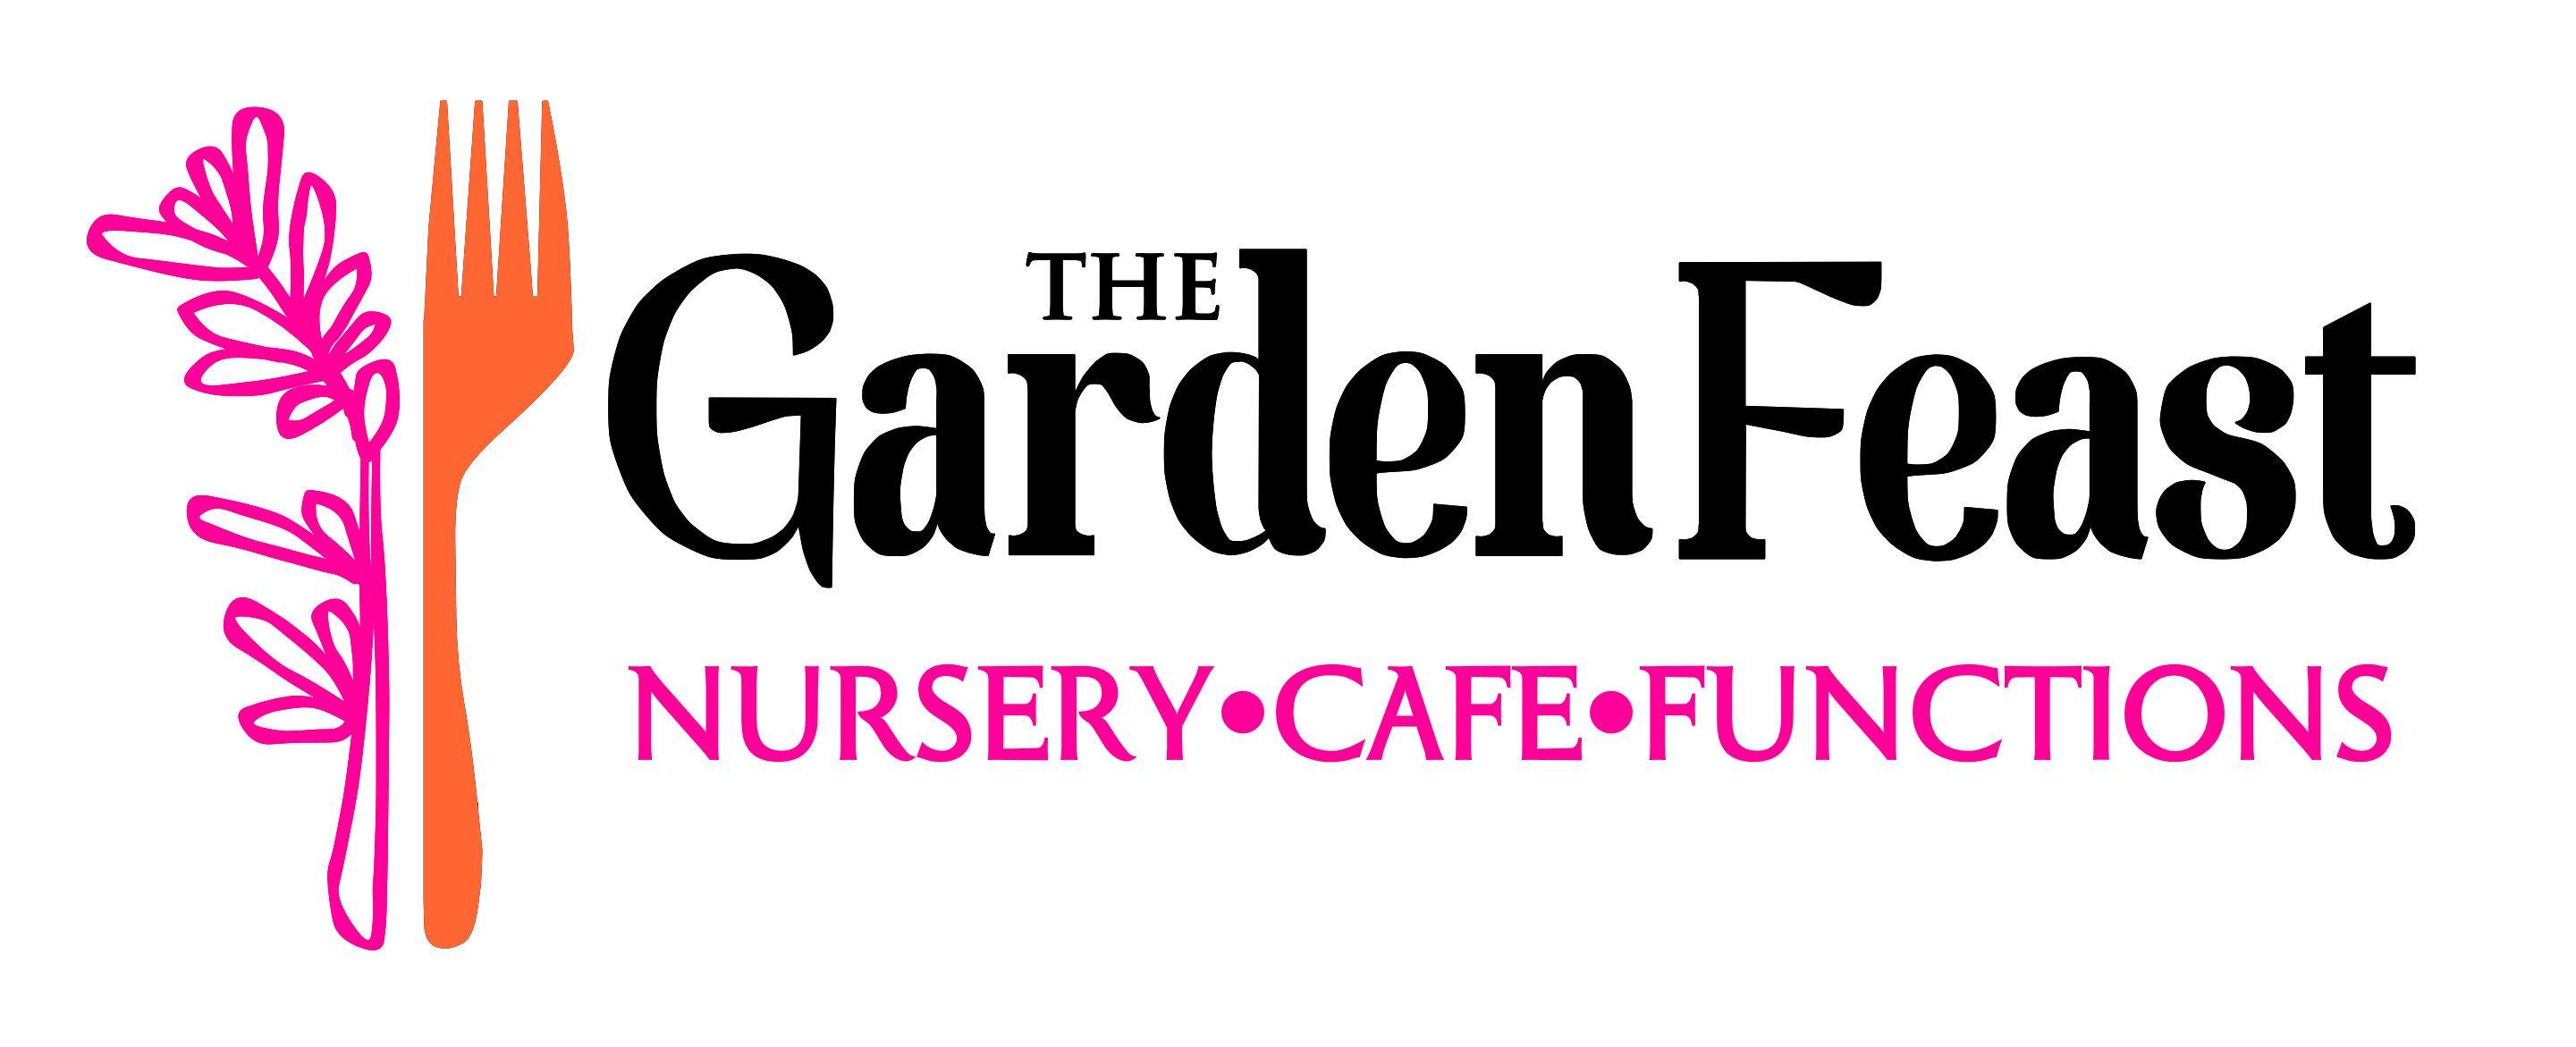 THE GARDEN FEAST NURSERY, CAFE, FUNCTIONS